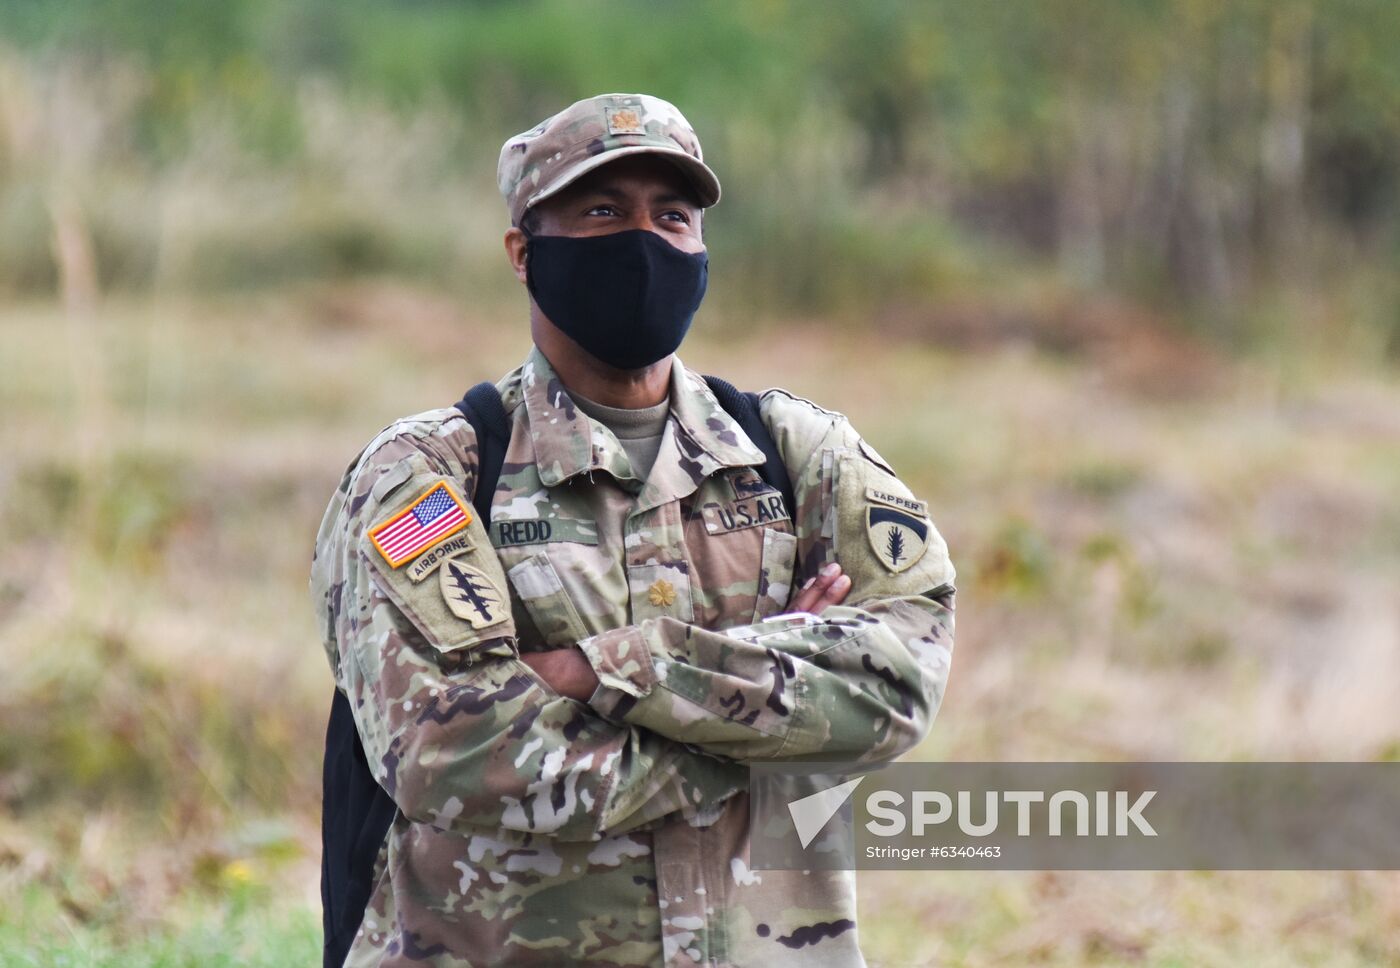 Ukraine NATO Military Drills